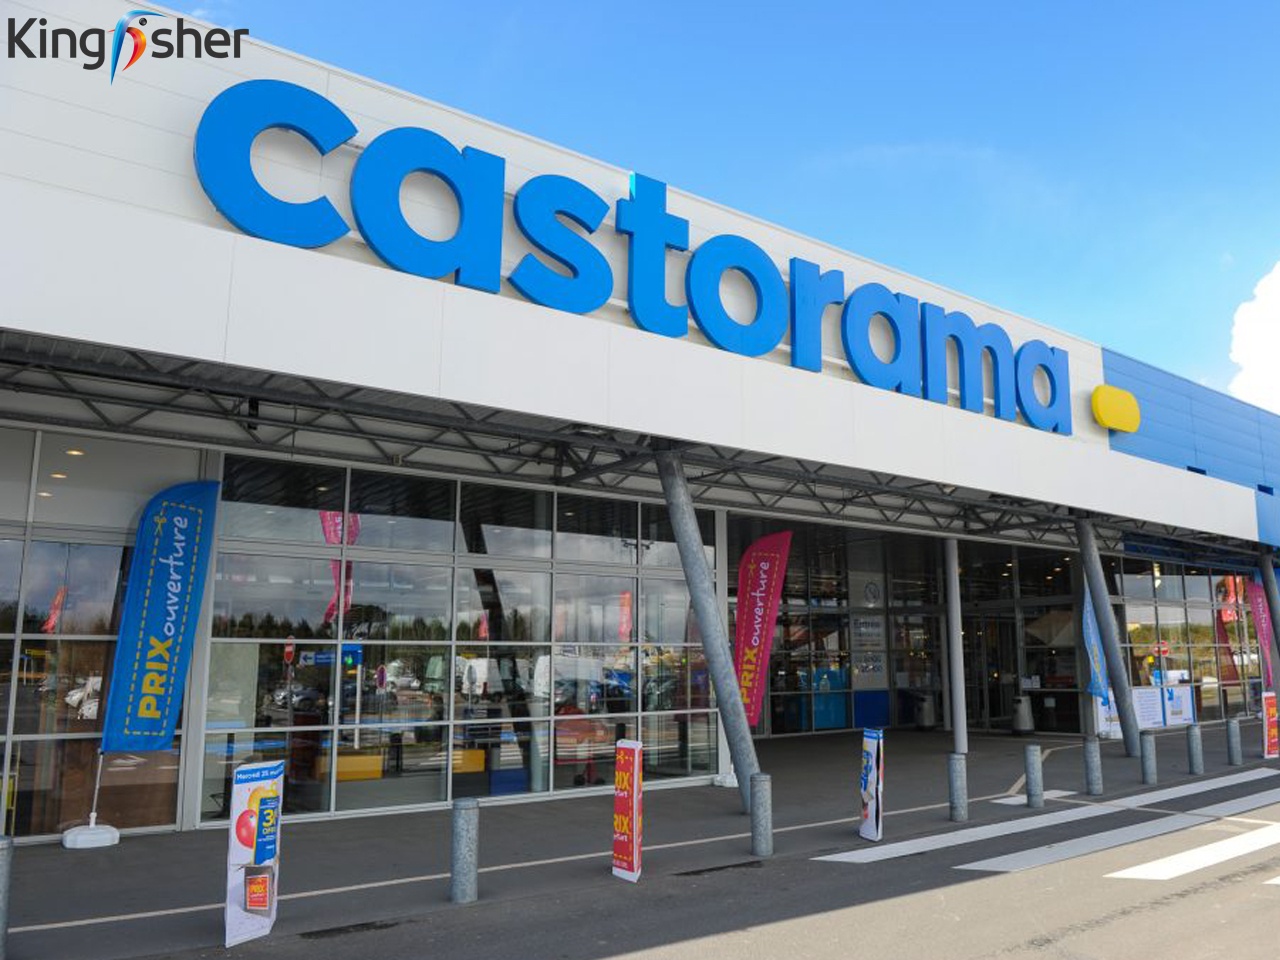 article 7589 article 1 castorama fermera 9 magasins en france d ici 2020